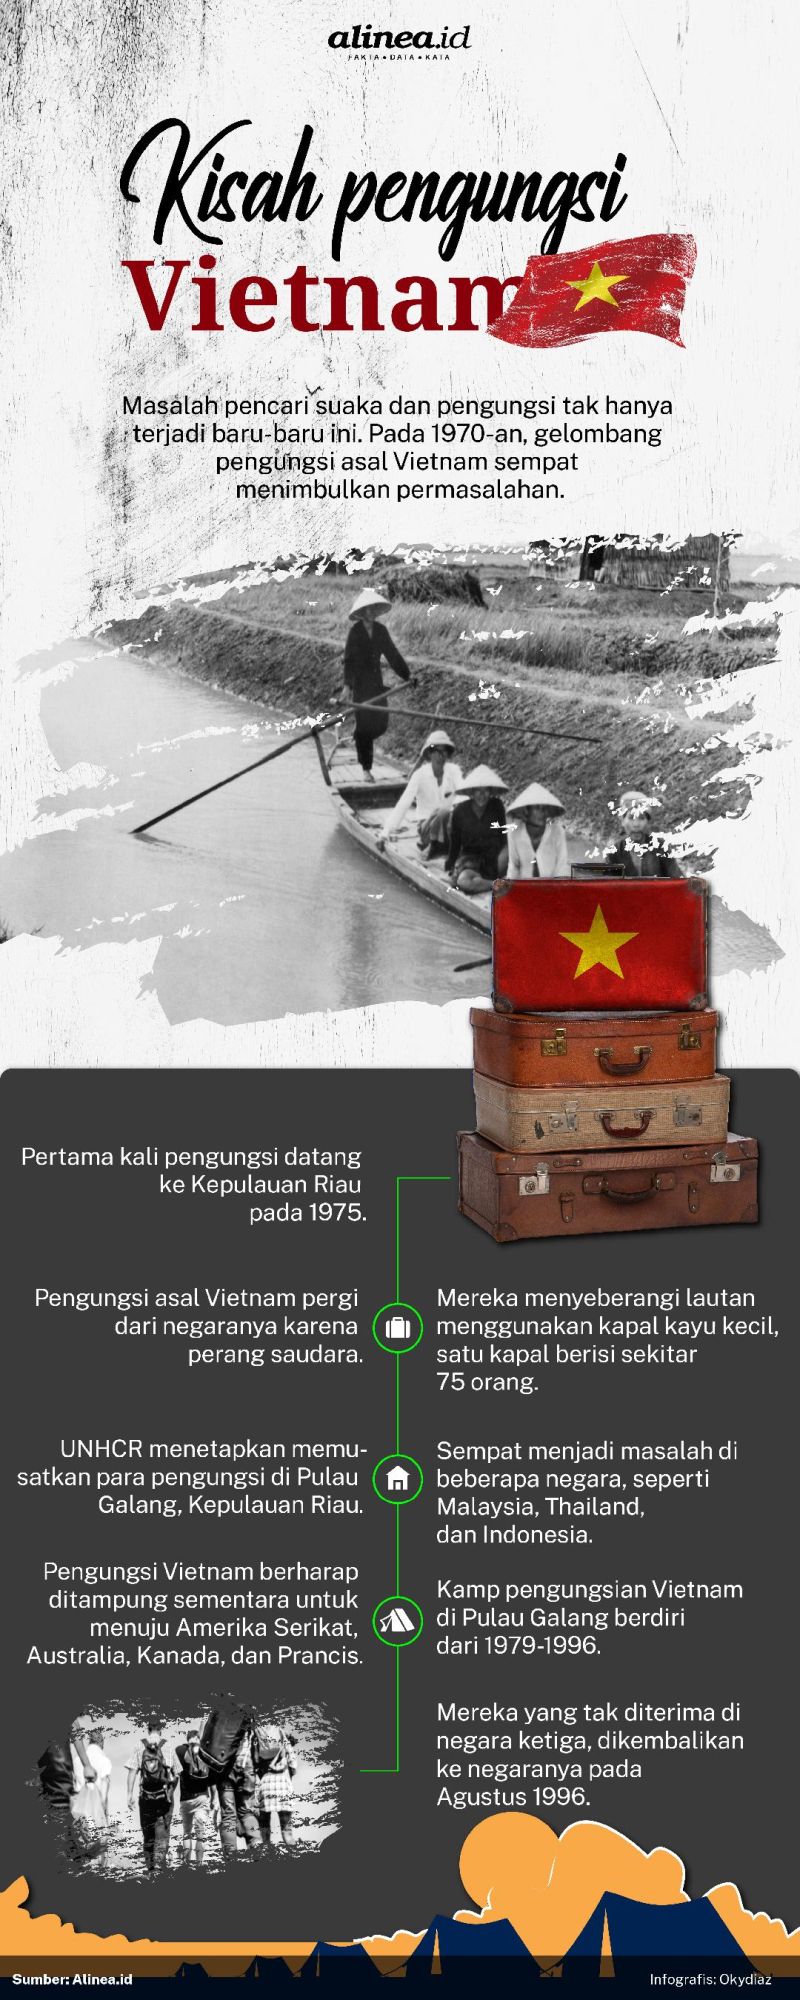 Pengungsi Vietnam datang pertama kali pada 1975. Alinea.id/Oky Diaz.